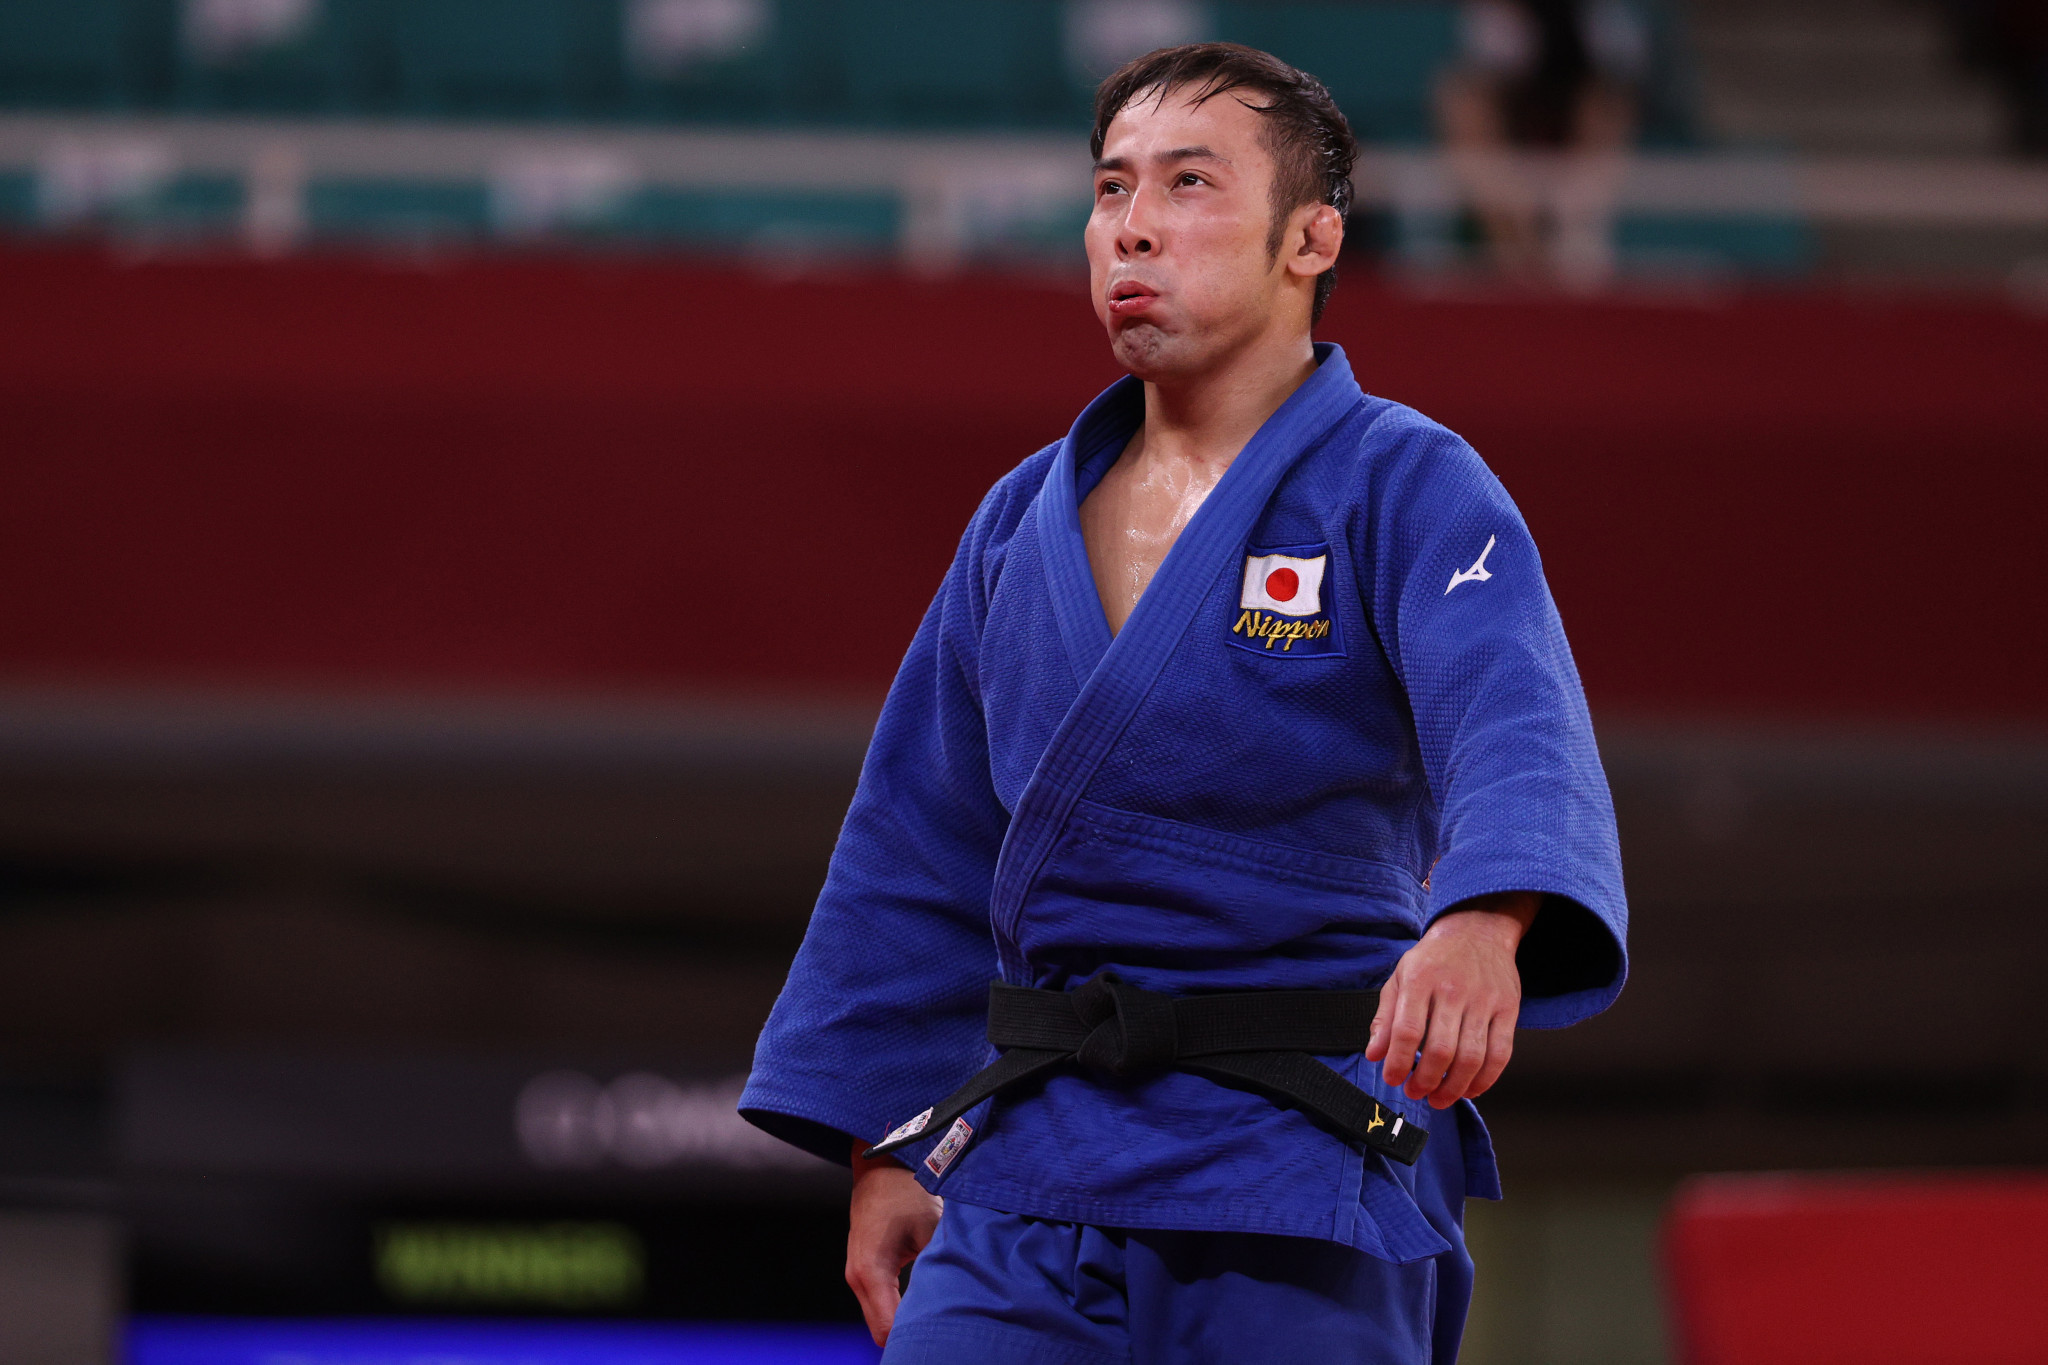 Judoka Takato wins Japan's first gold medal of Tokyo 2020